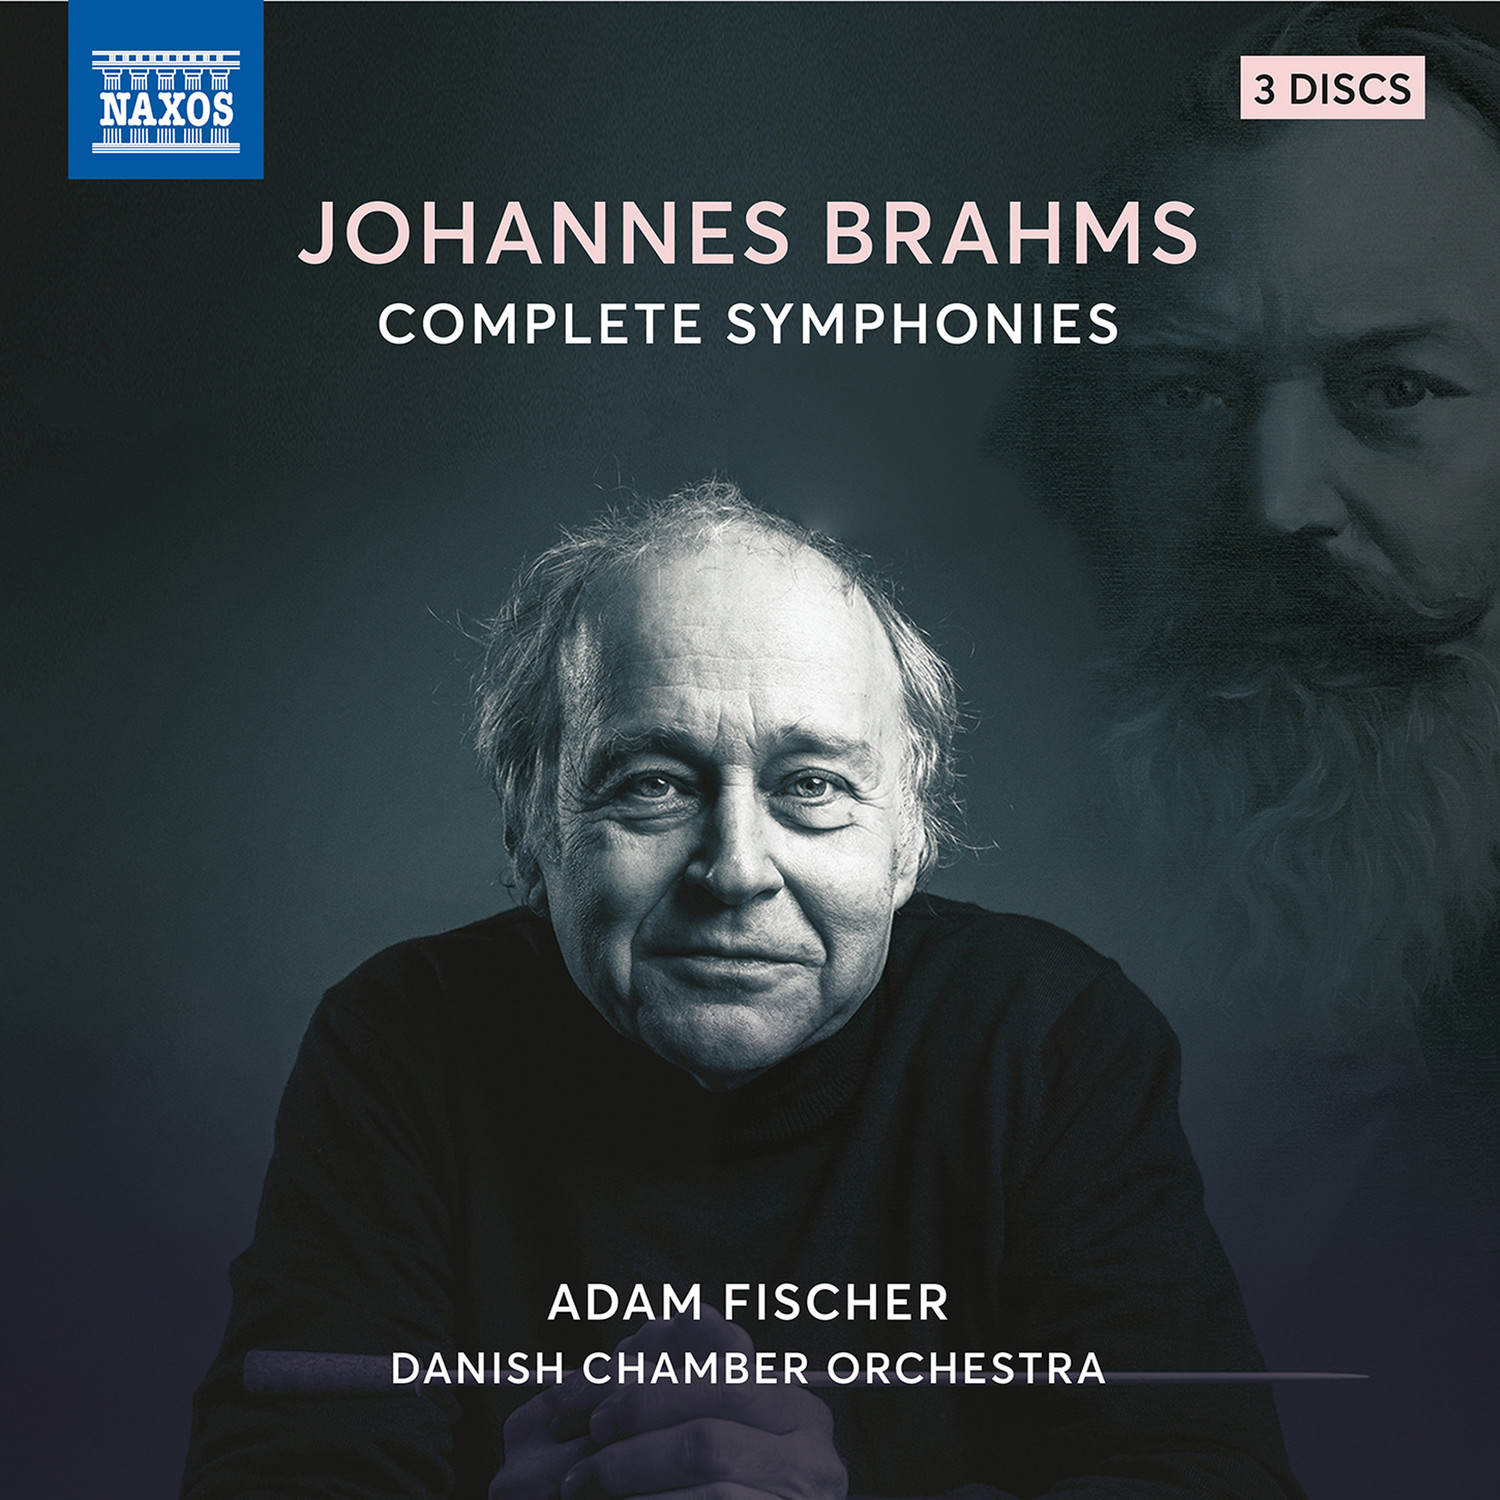 031 Brahms symphonies